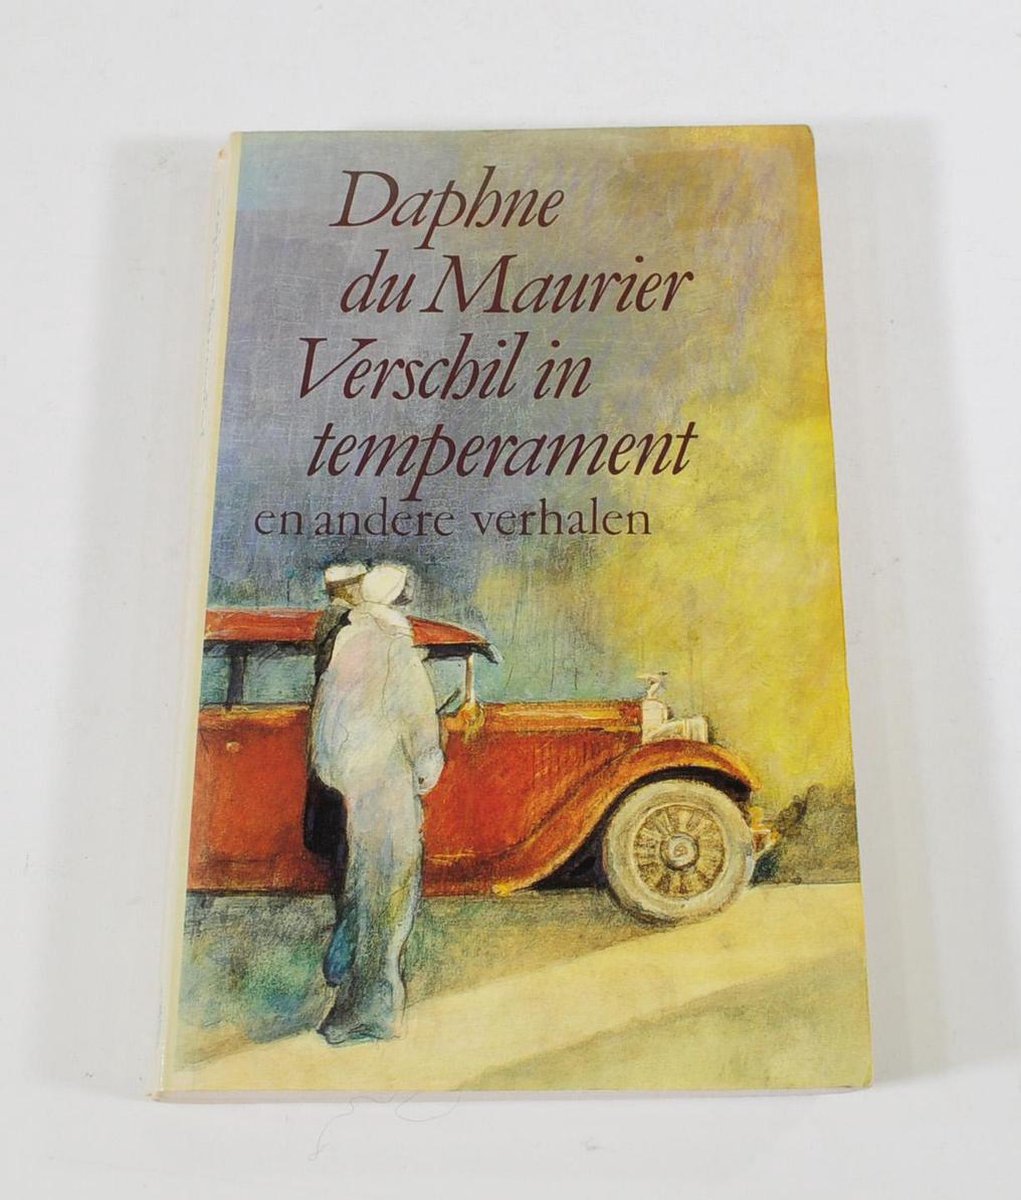 Boek - Verschil in temperament en andere verhalen - Daphne du Maurier - ISBN 9026978278 - E816